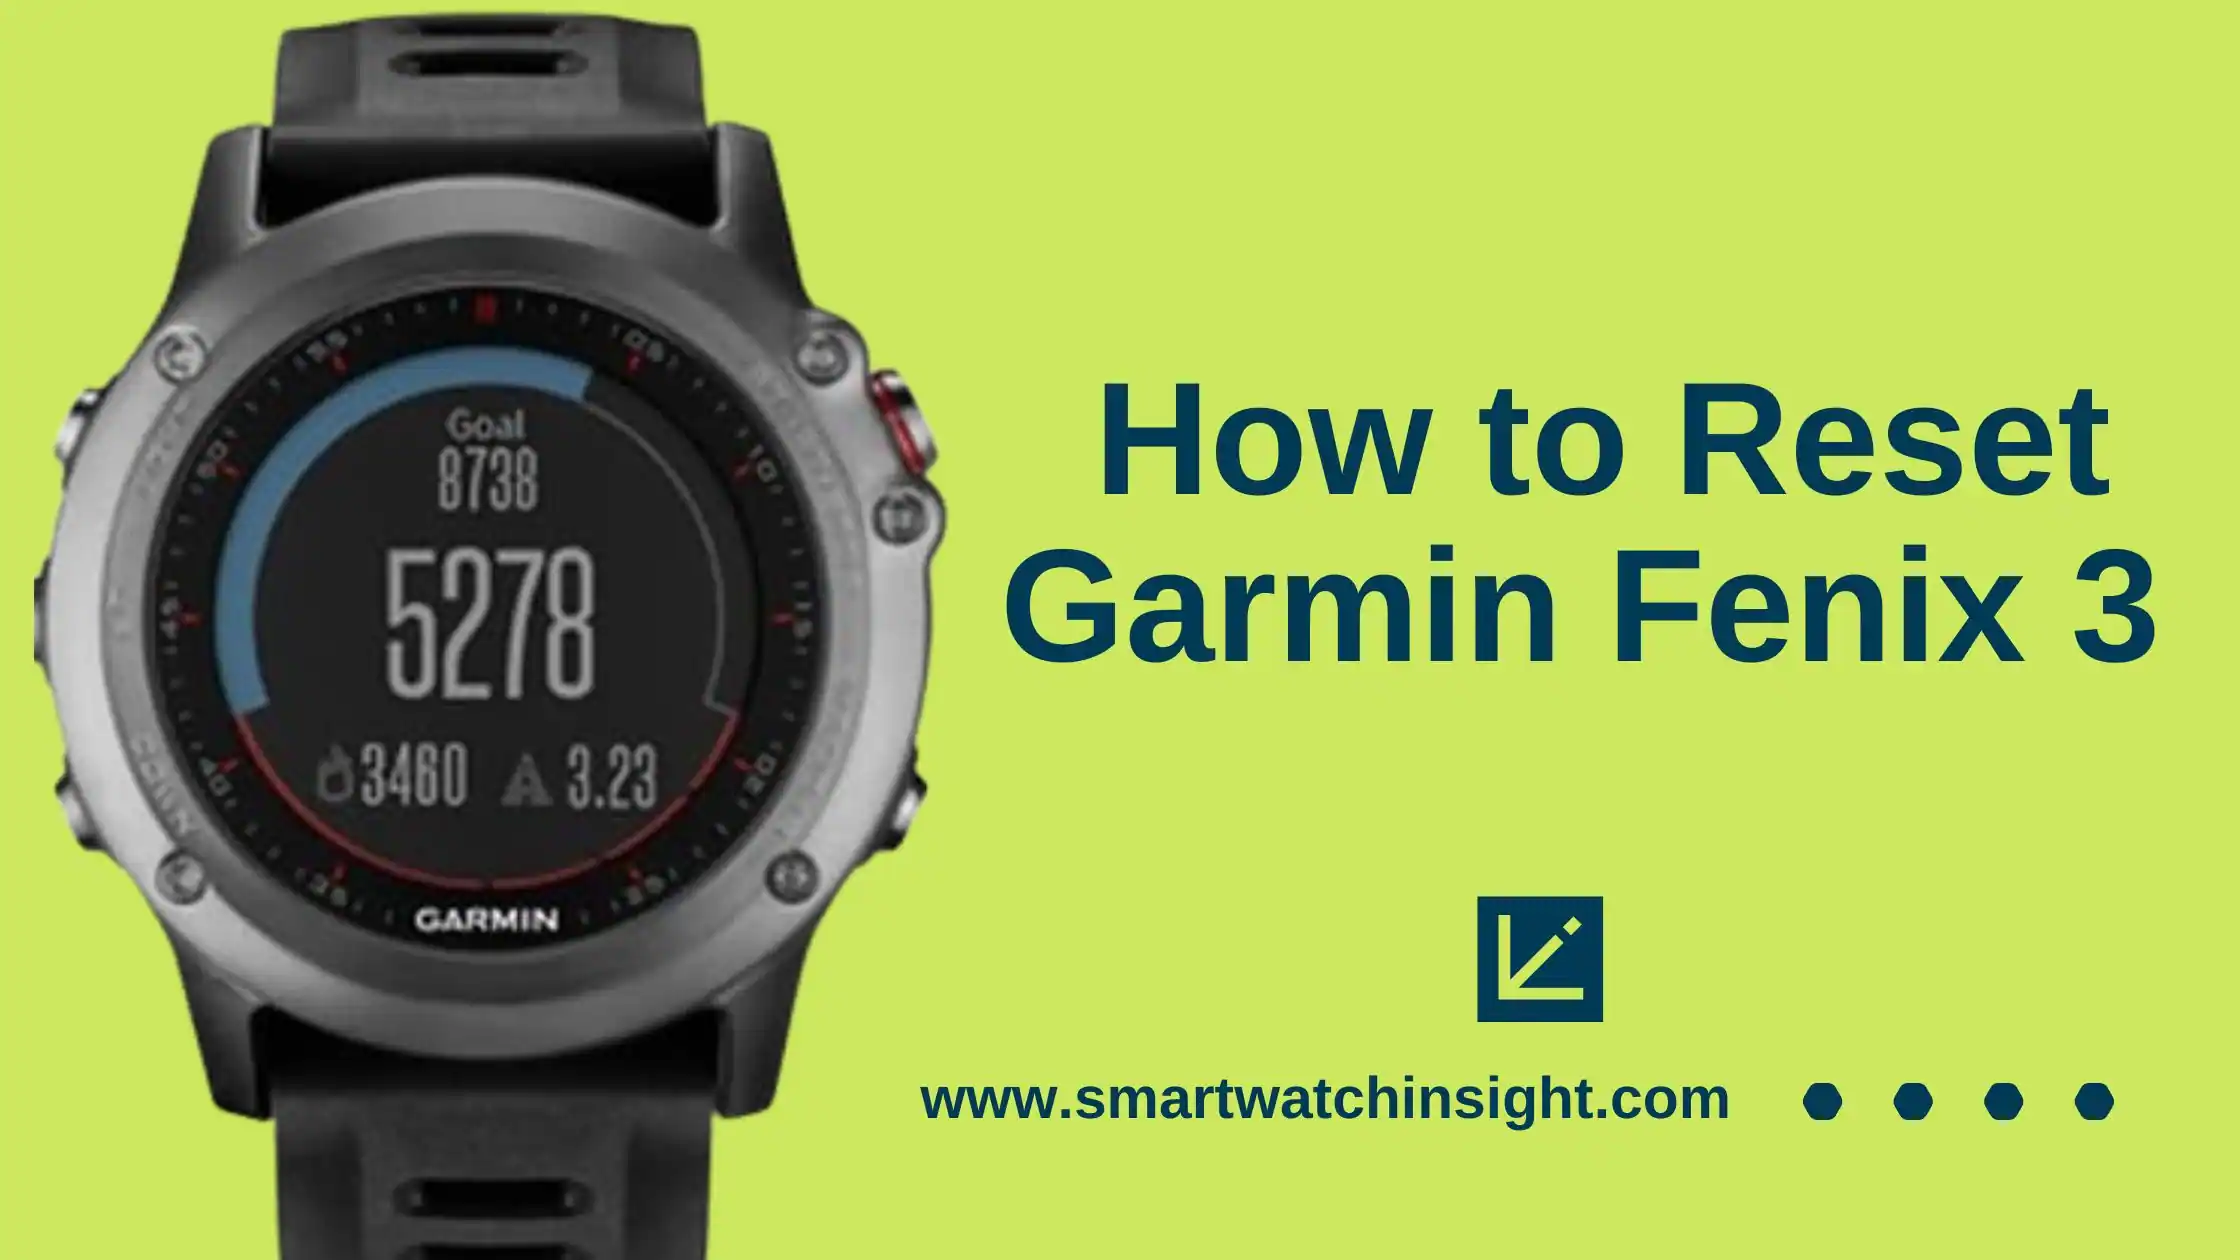 How to Reset Garmin Fenix 3